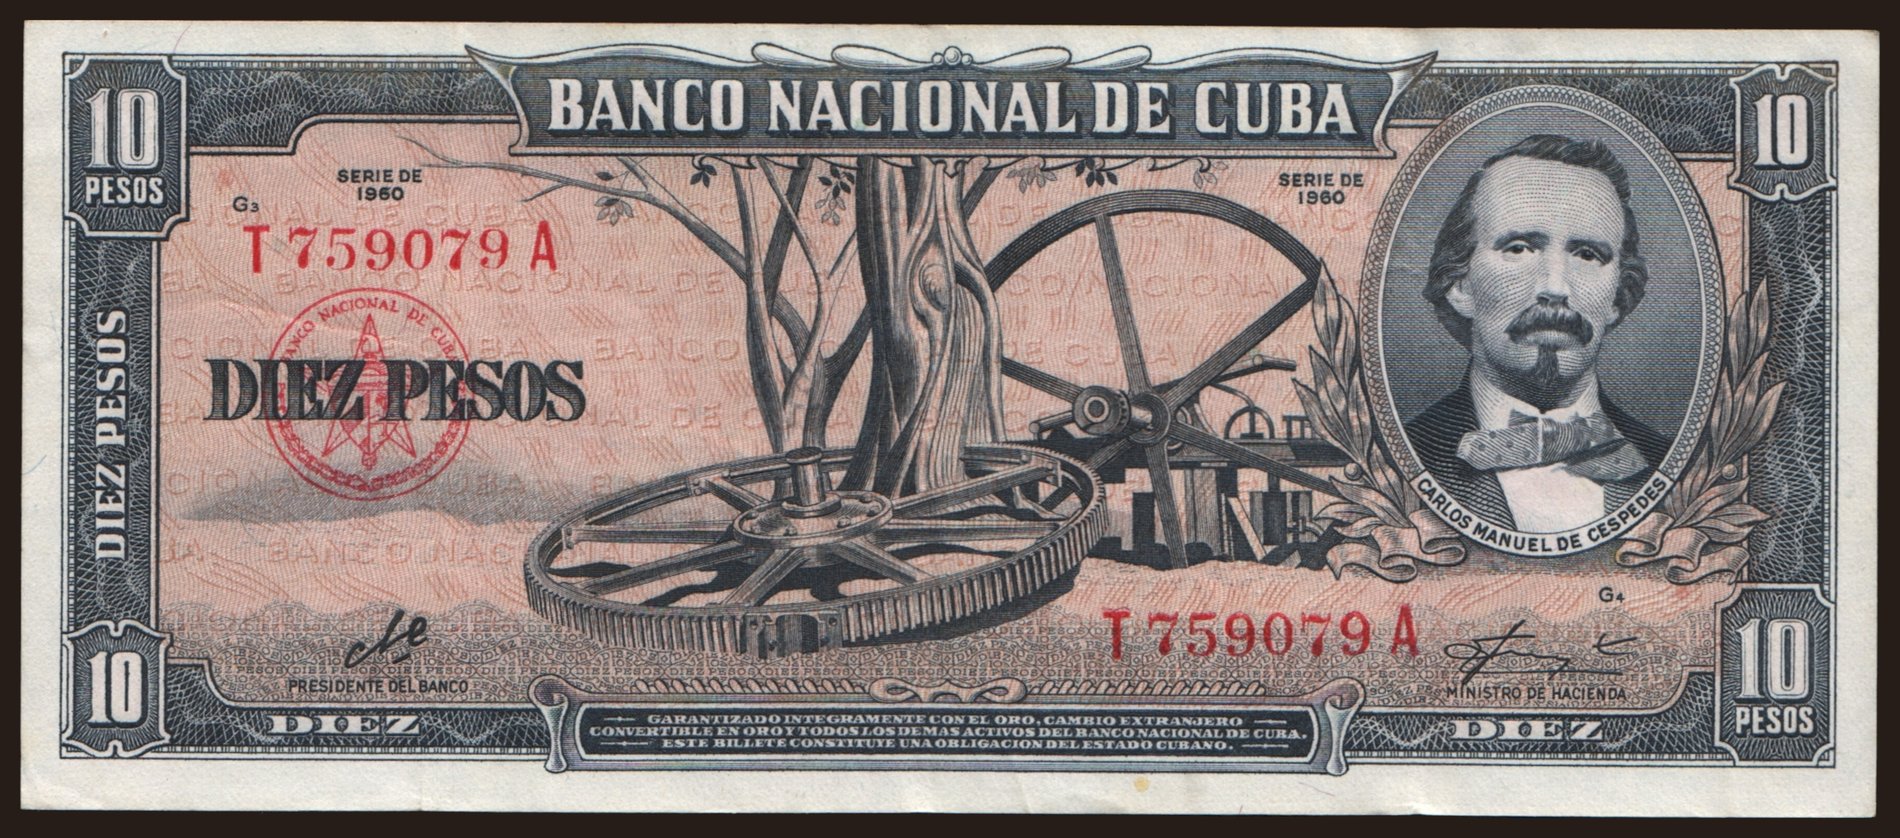 10 pesos, 1960